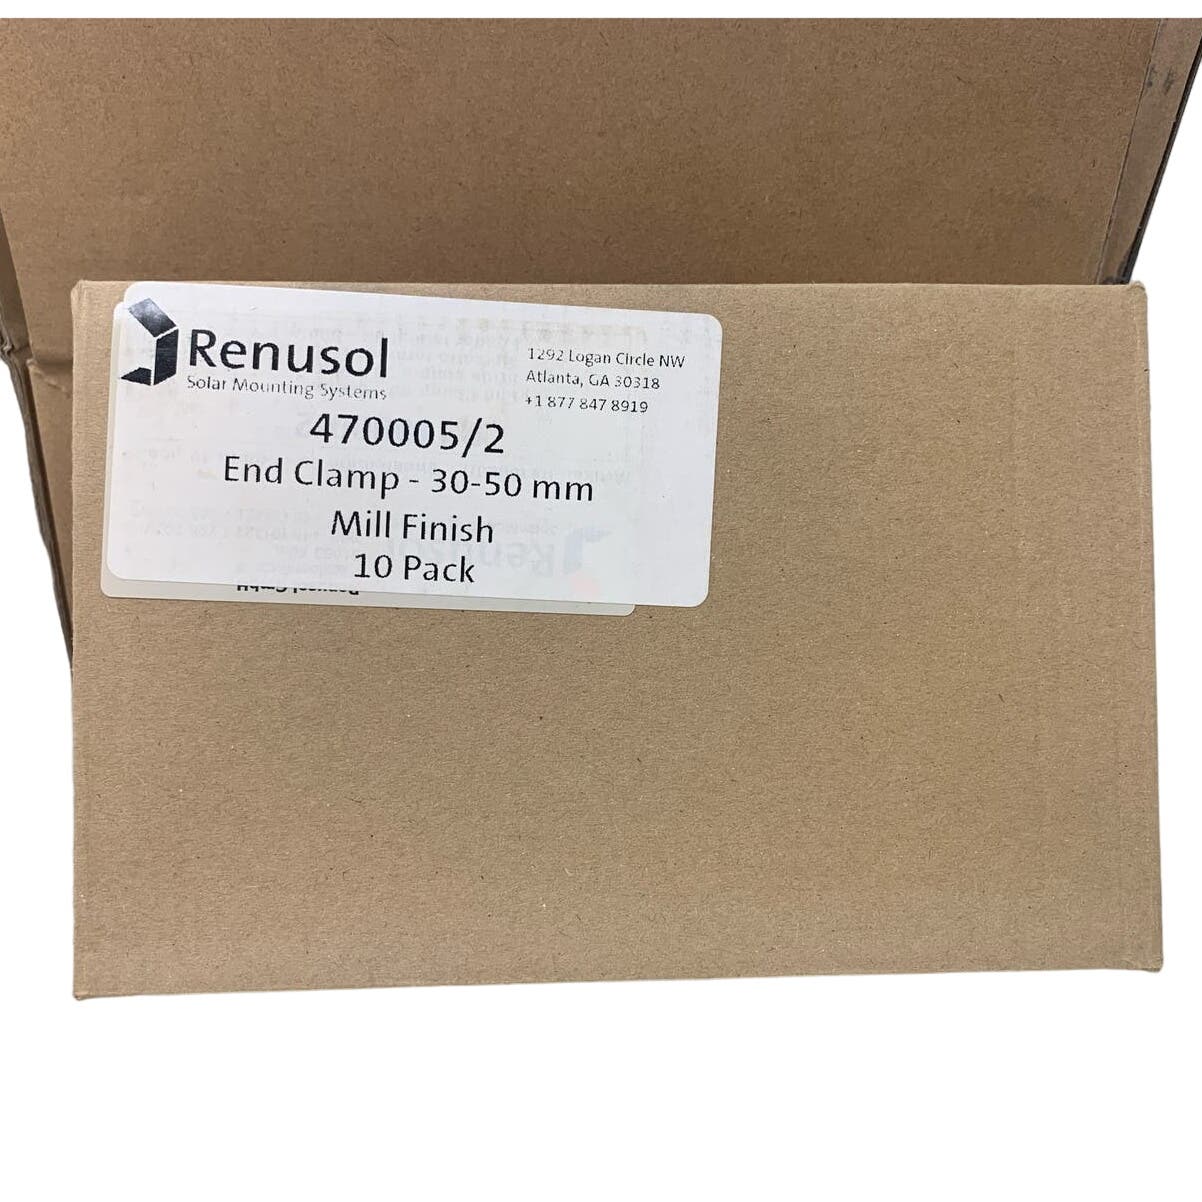 New In Box 10 piece Renusol 470005/2 Mill Finish End Clamp 30-50mm Solar Mount